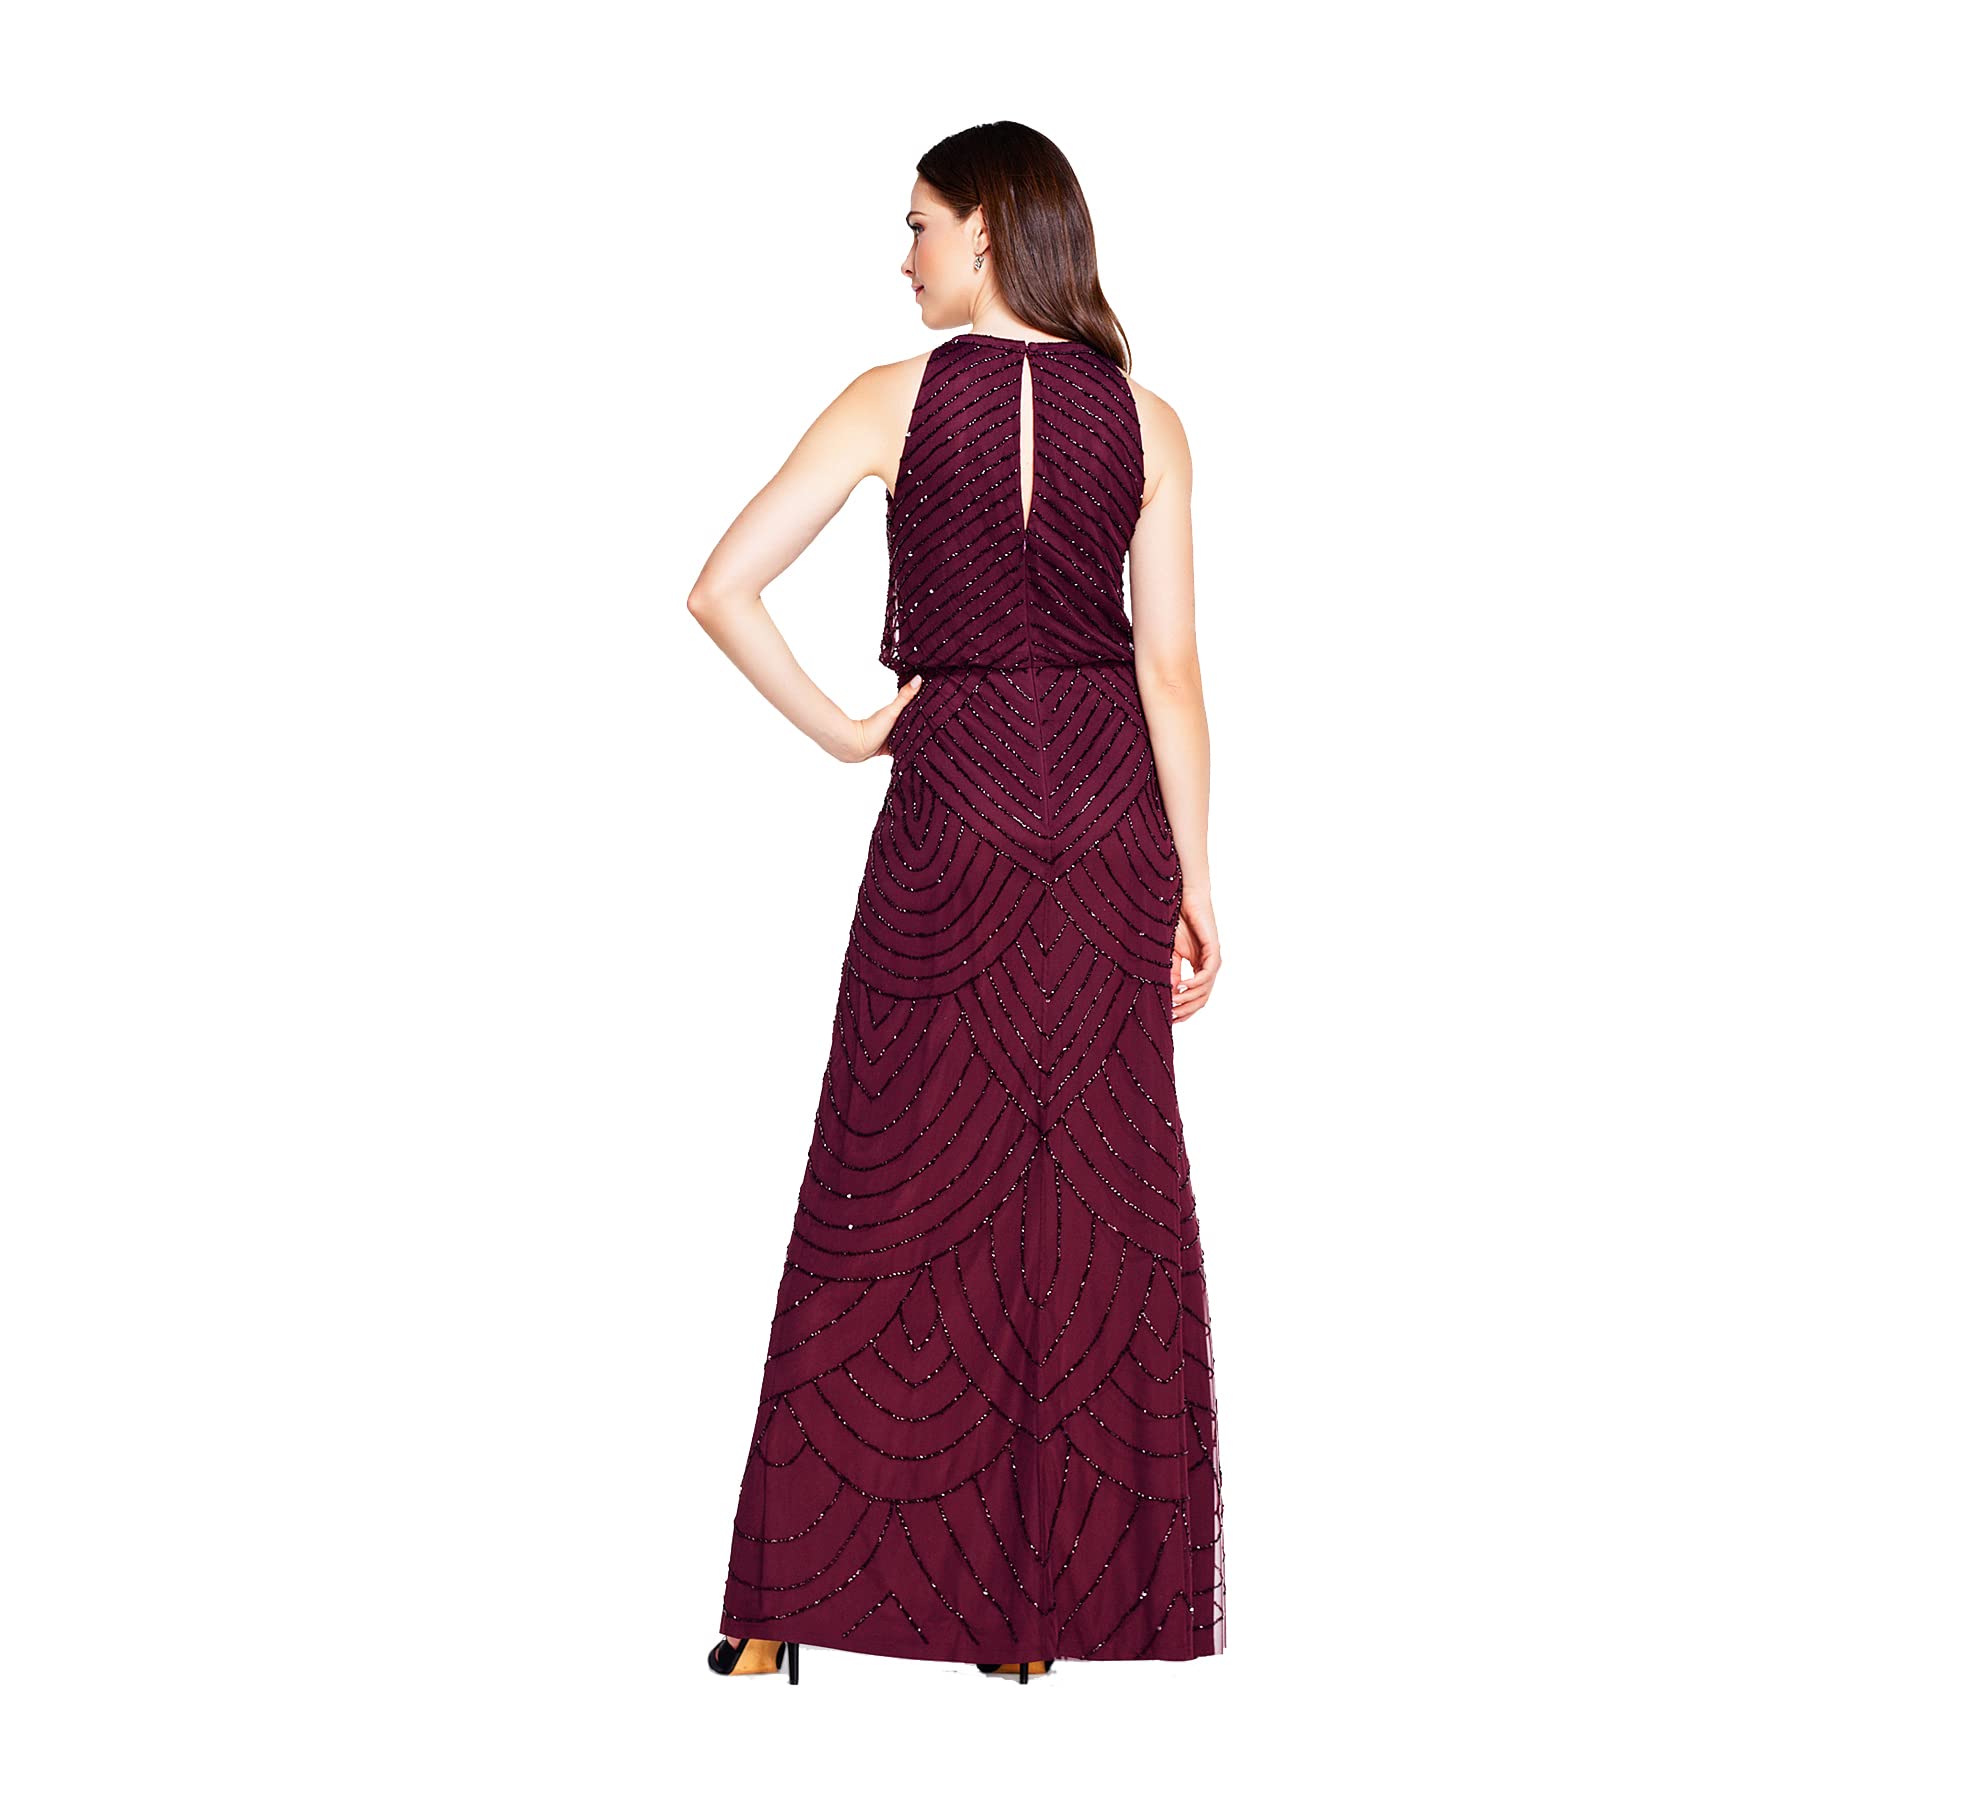 Adrianna Papell Women's Art Deco Beaded Blouson Dress with Halter Neckline